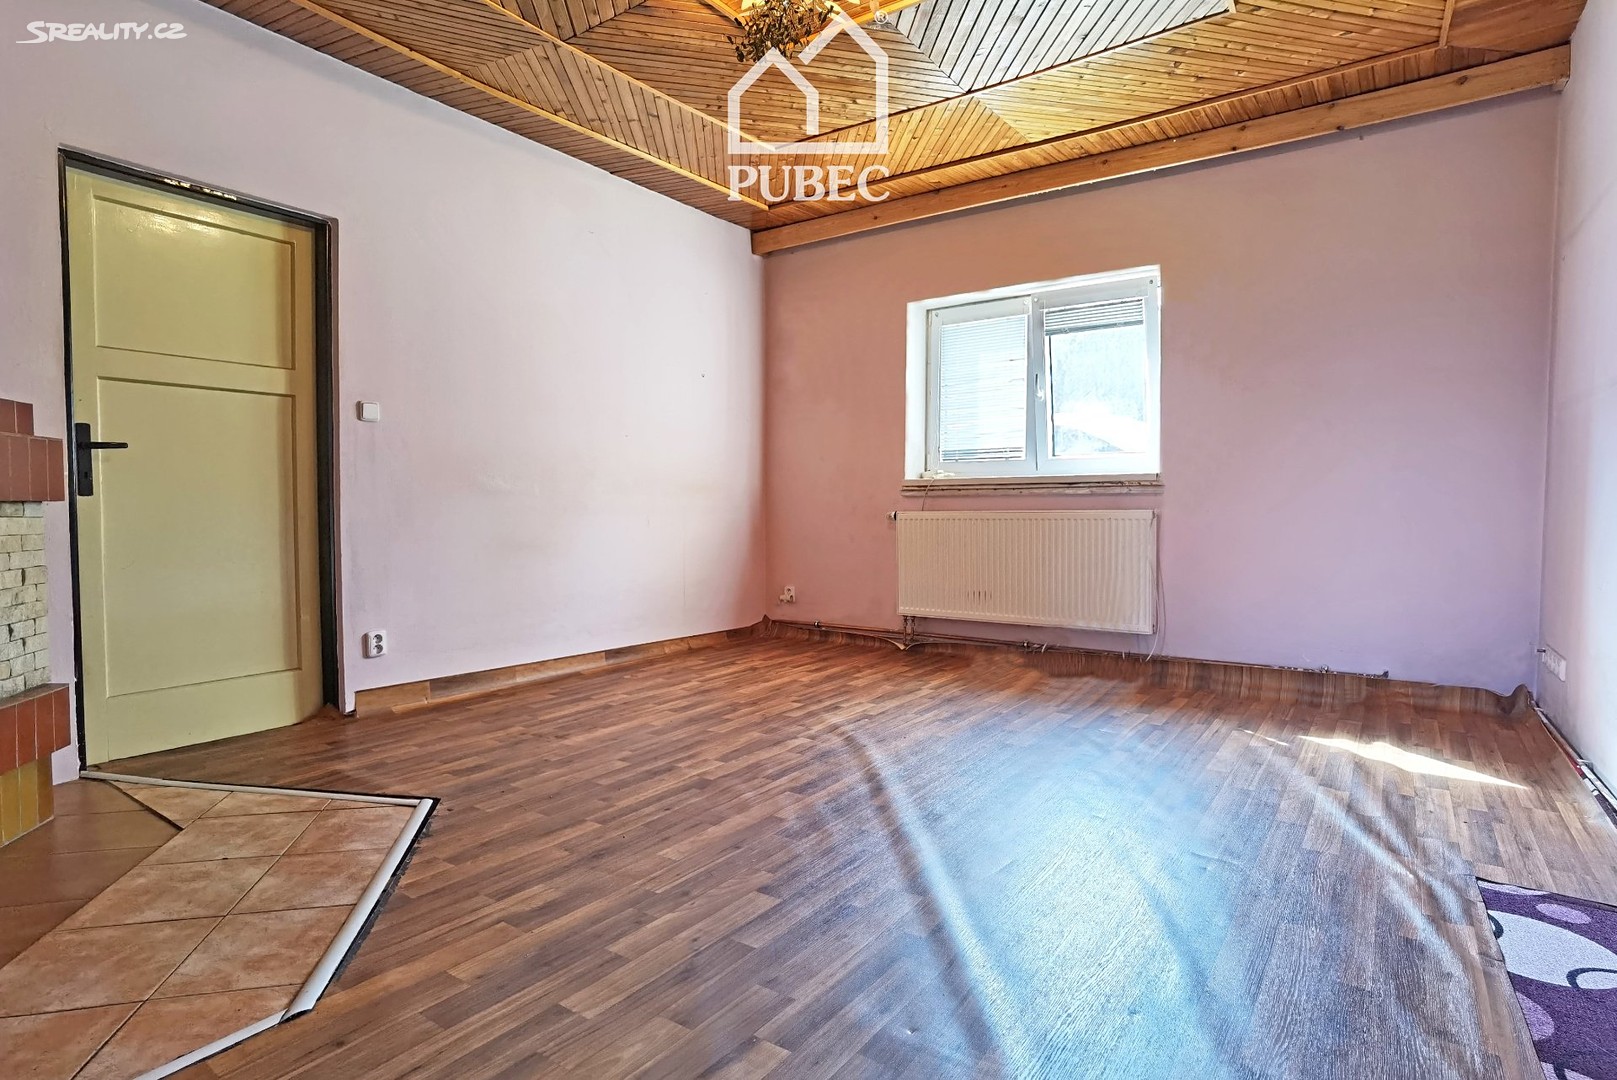 Prodej  rodinného domu 160 m², pozemek 179 m², Úlice - Hracholusky, okres Plzeň-sever